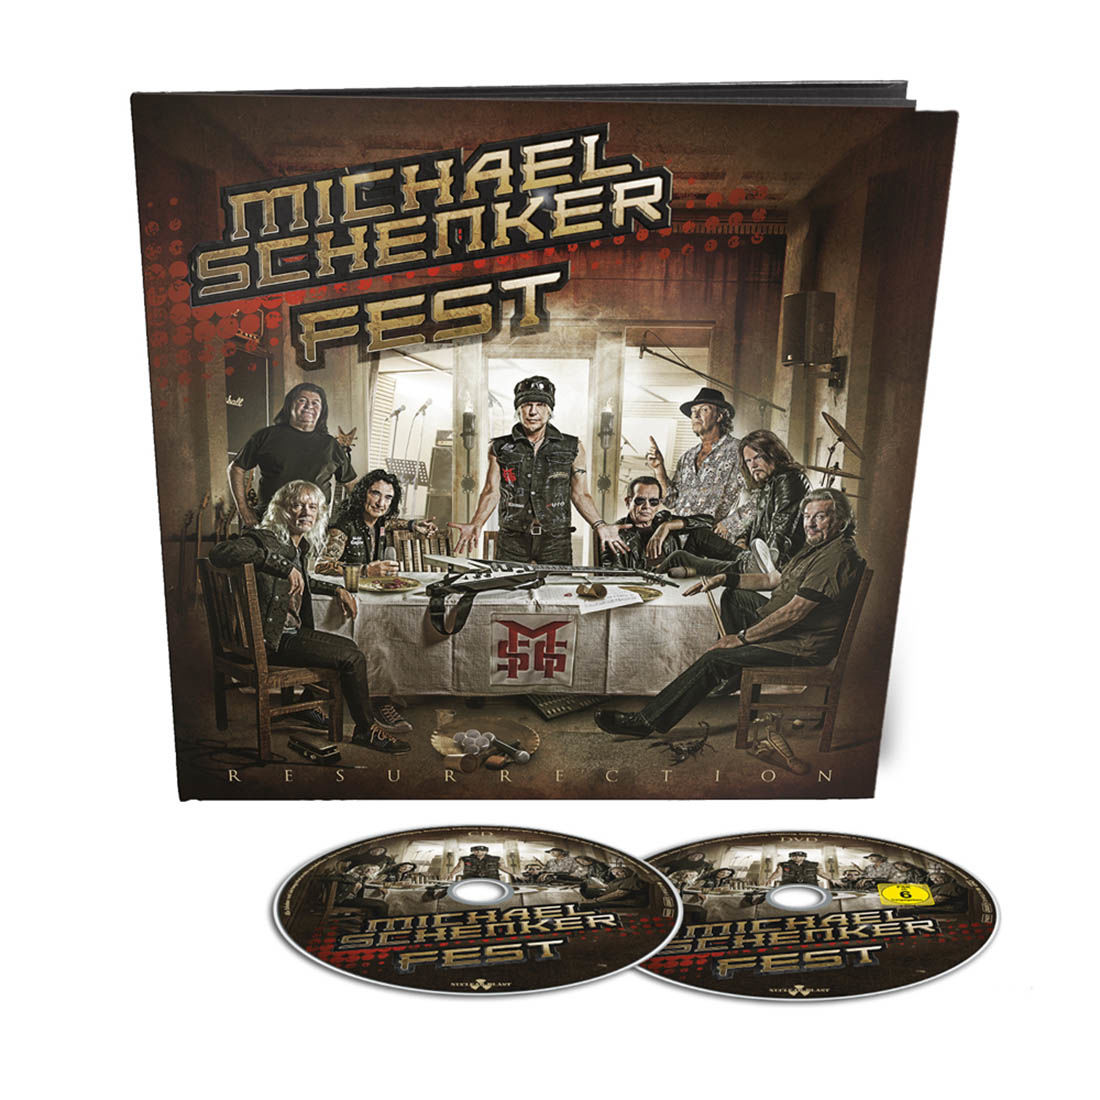 Michael Schenker Fest - Resurrection: Limited Earbook CD + DVD